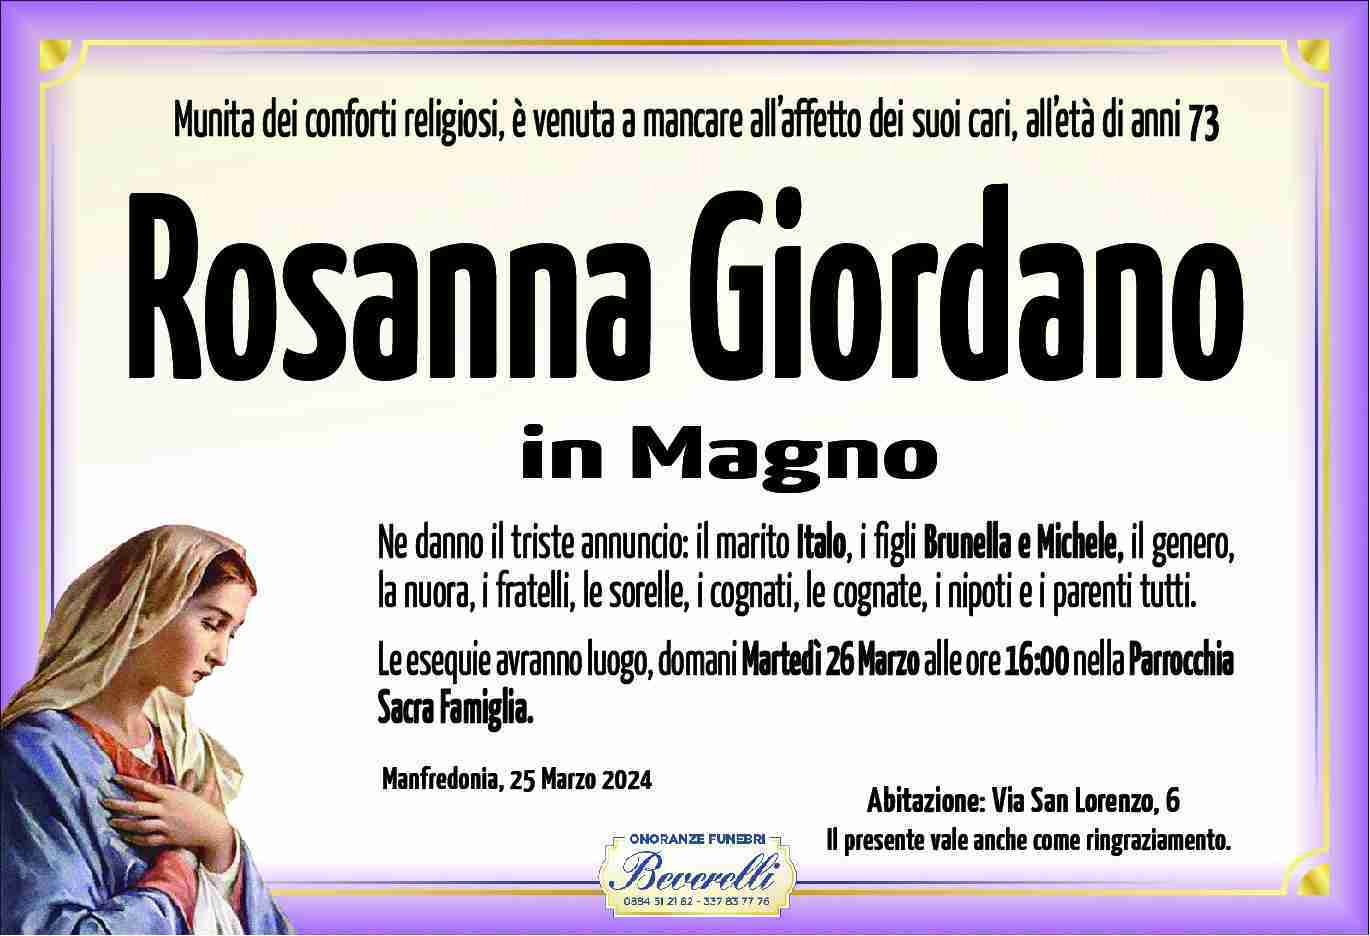 Rosanna Giordano